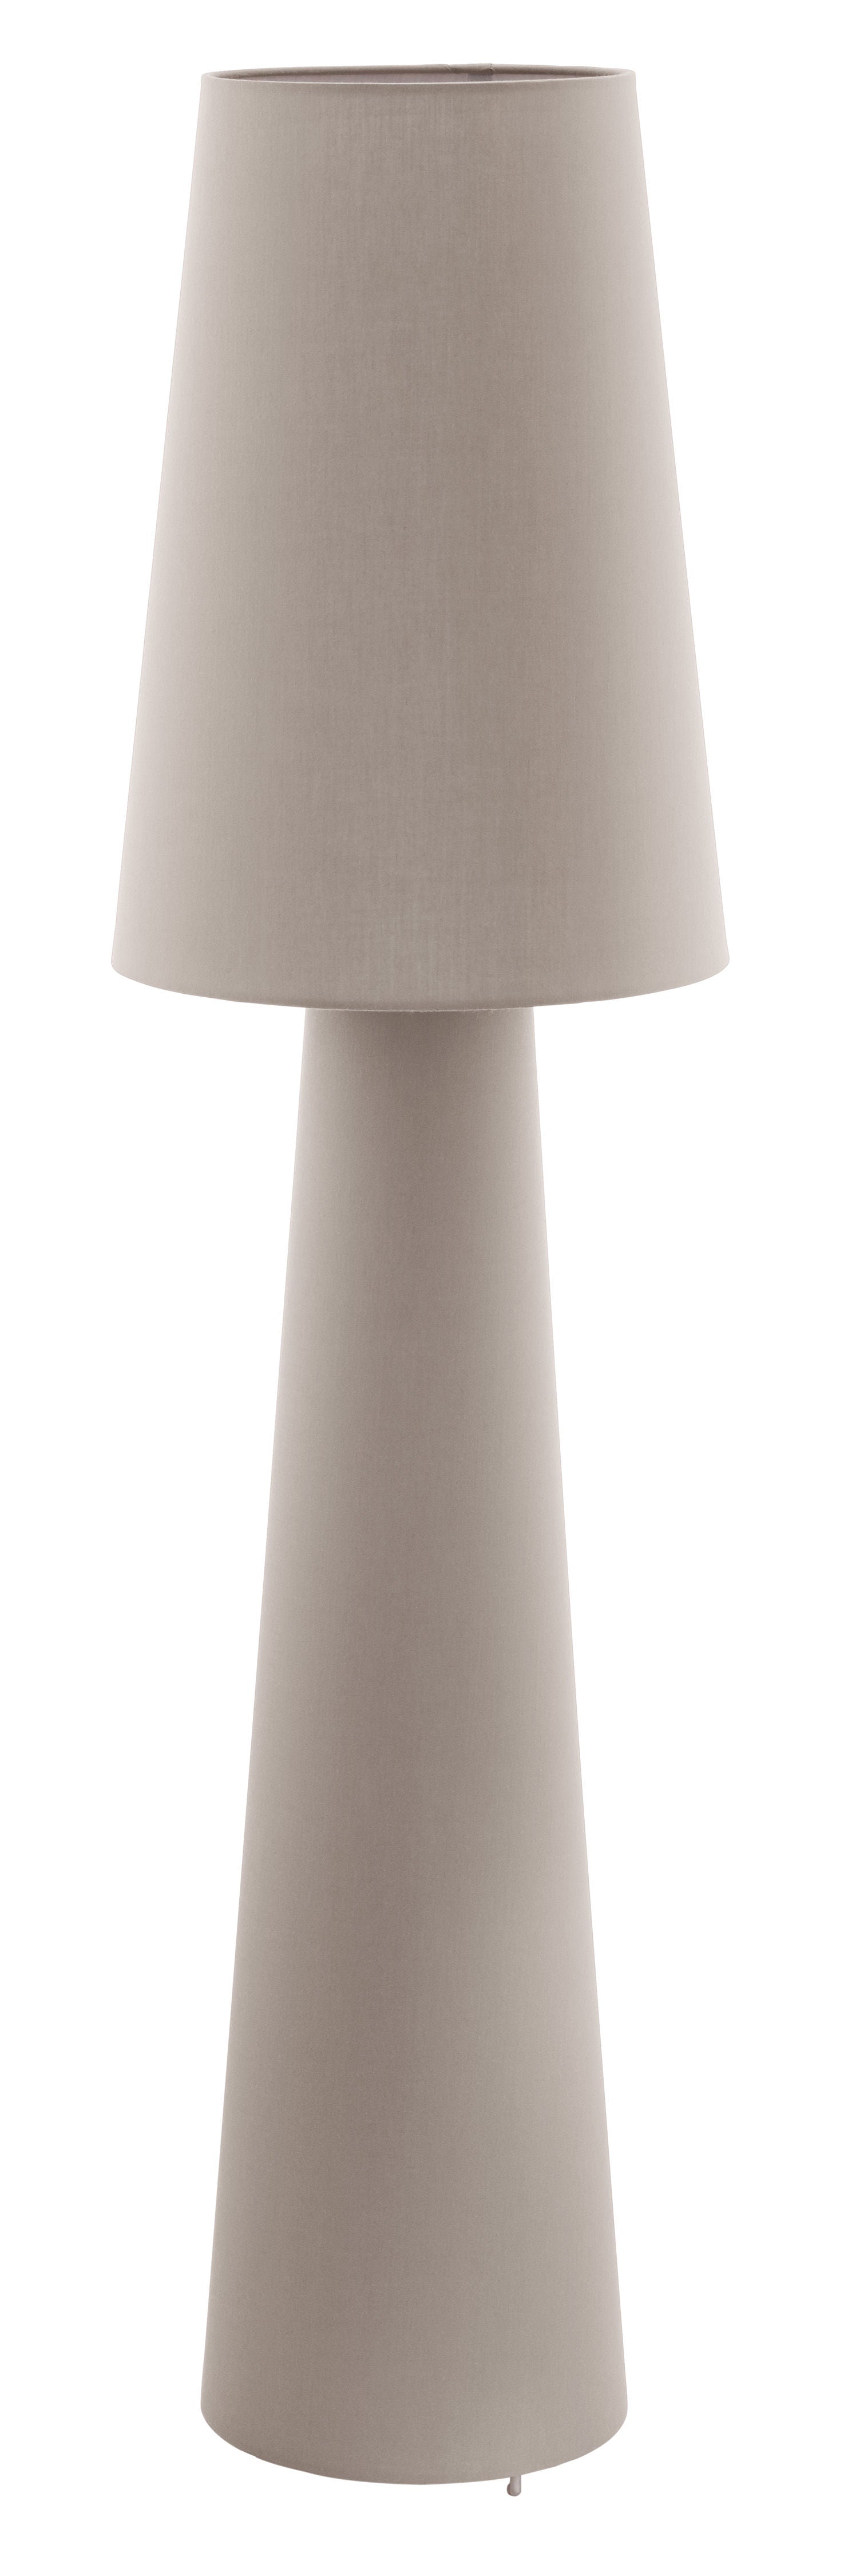 Carpara Lampe sur pied Brun - 97141A | EGLO